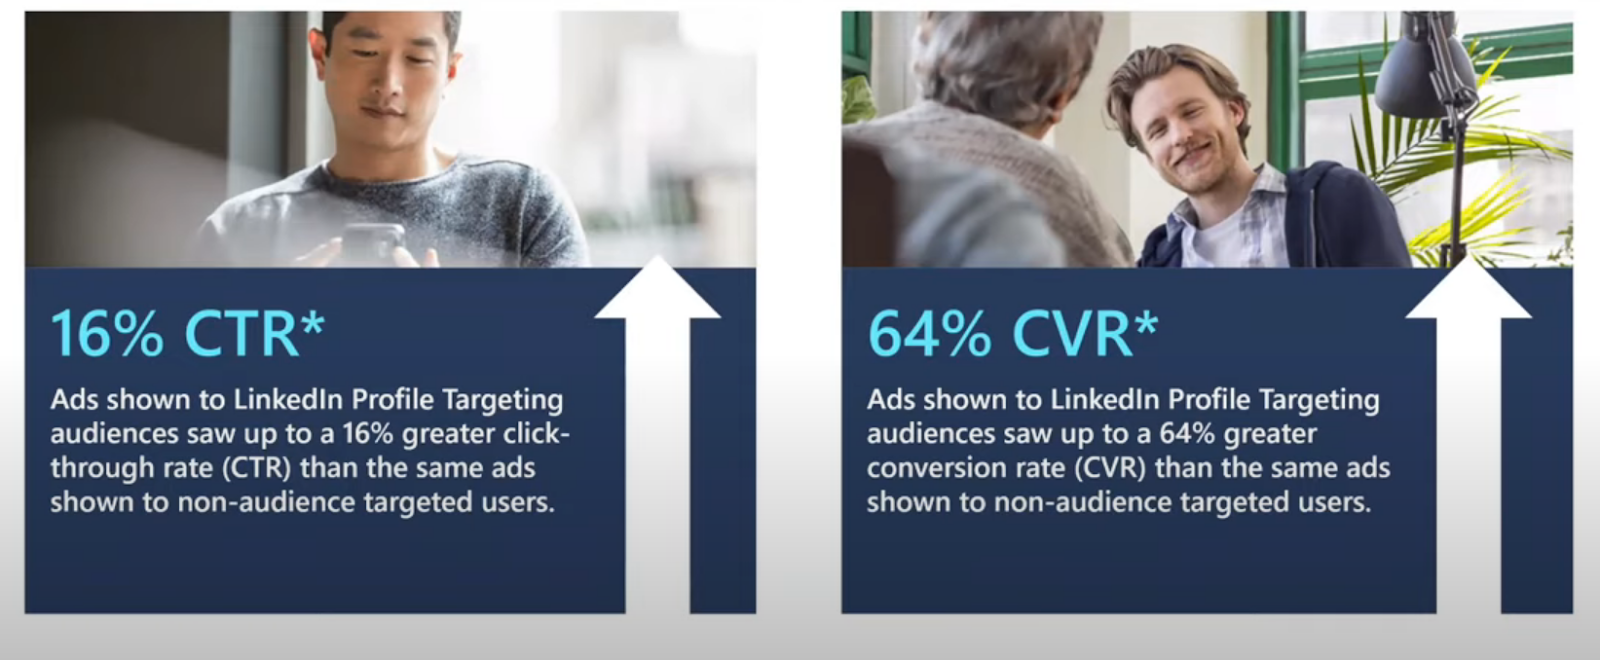 Microsoft Advertising LinkedIn stats from webinar